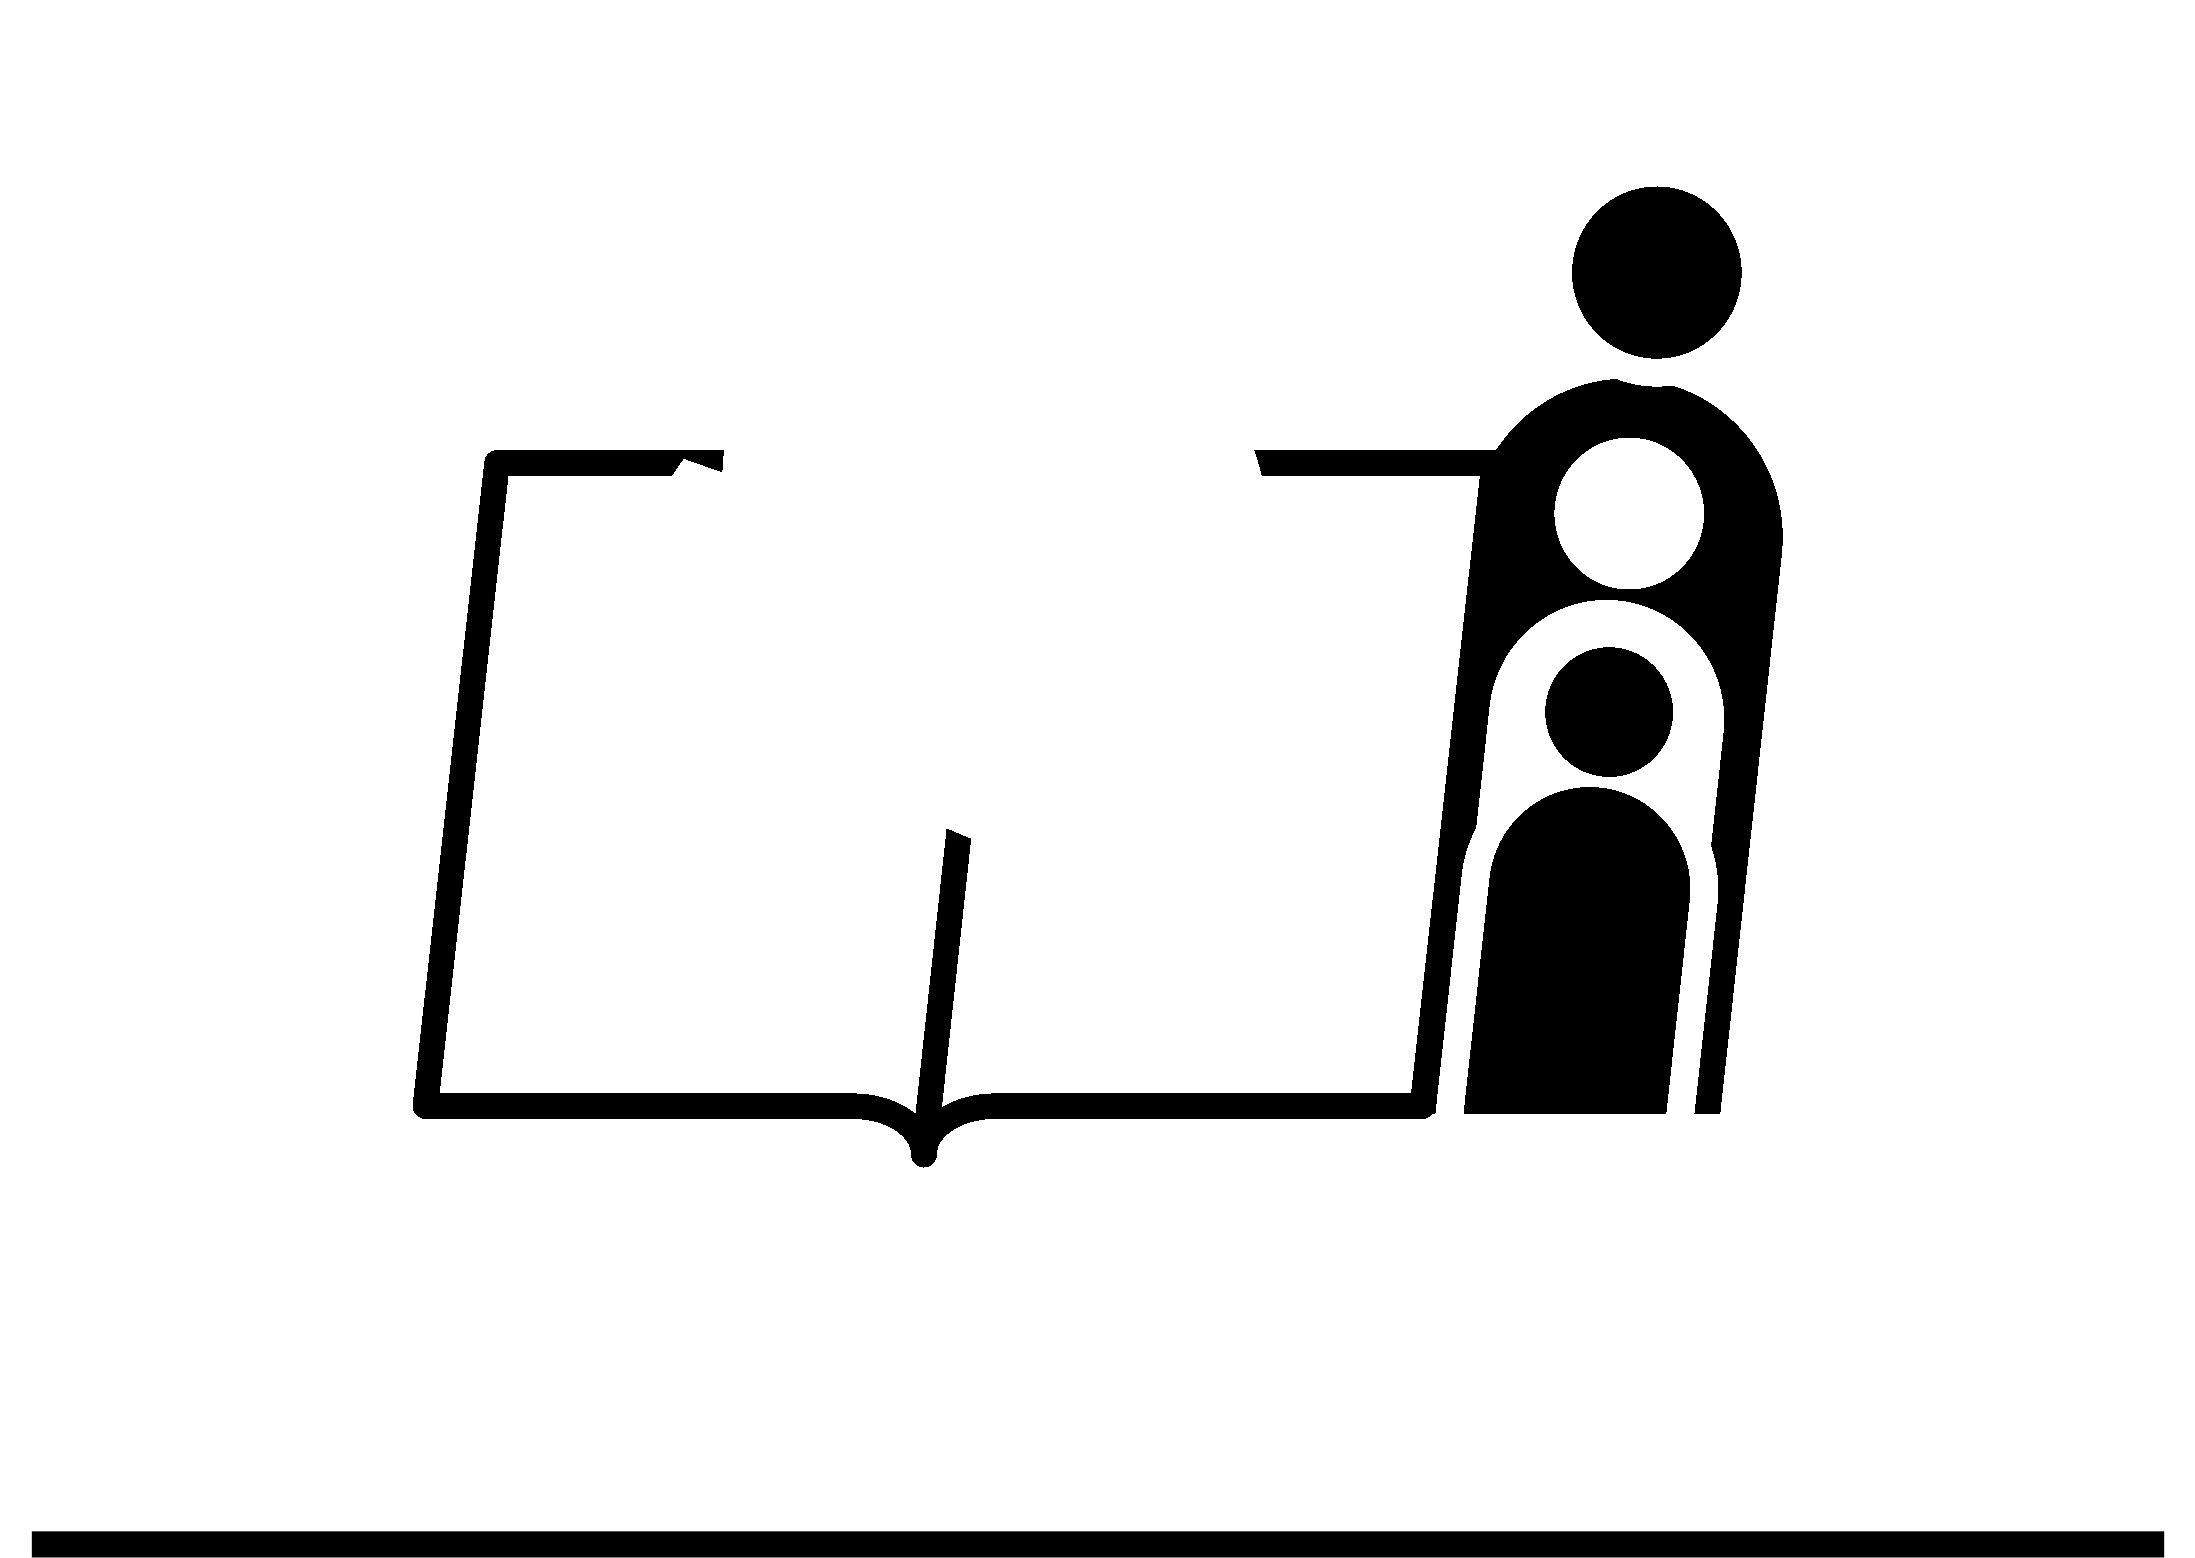 Sunday School Logo Black And White - Logos School (2400x2400)